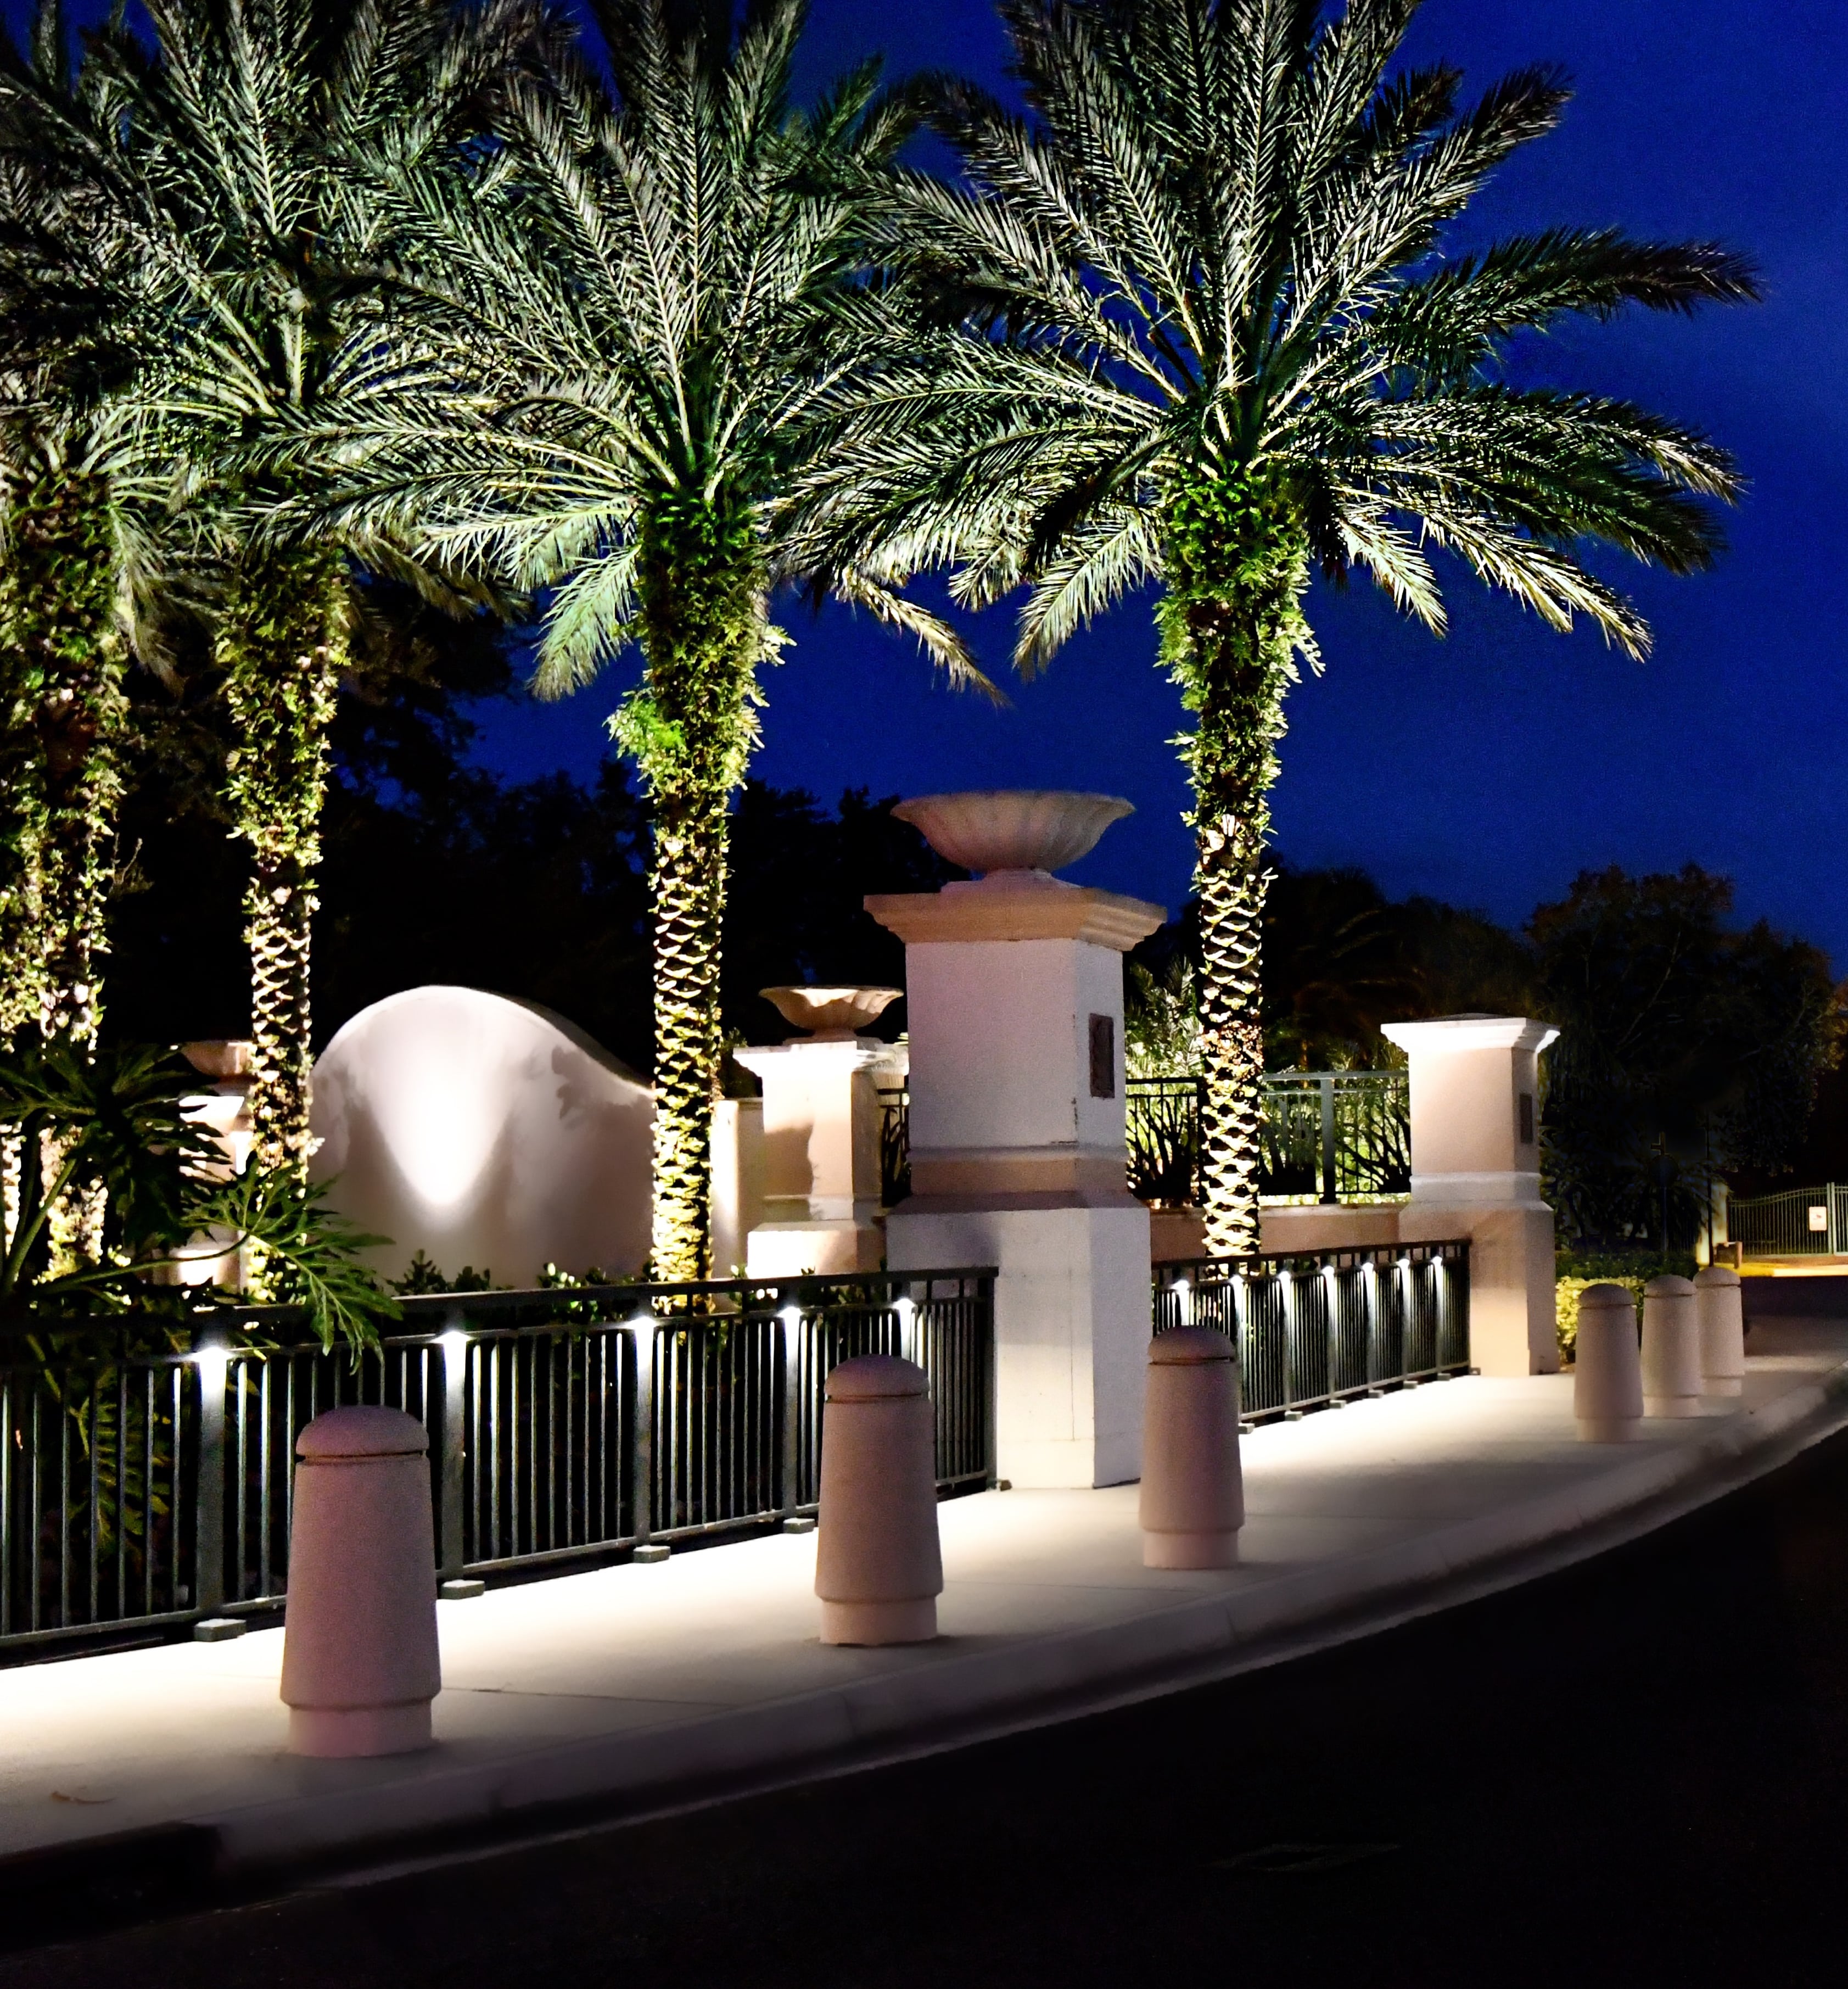 Landscape lighting form Las Vegas outdoor lighting company